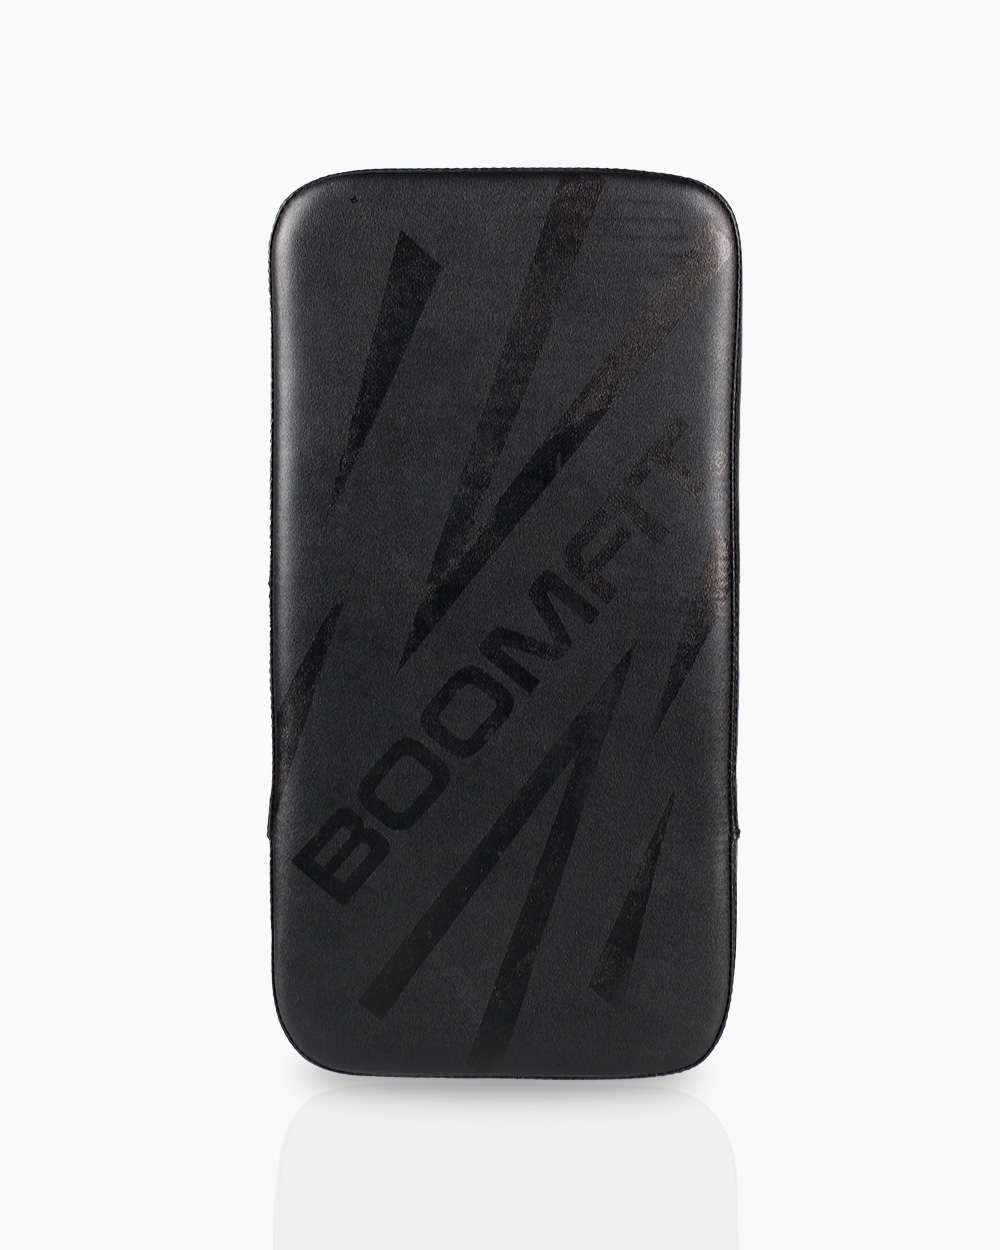 Olympic Bar 20Kg Black Edition - BOOMFIT